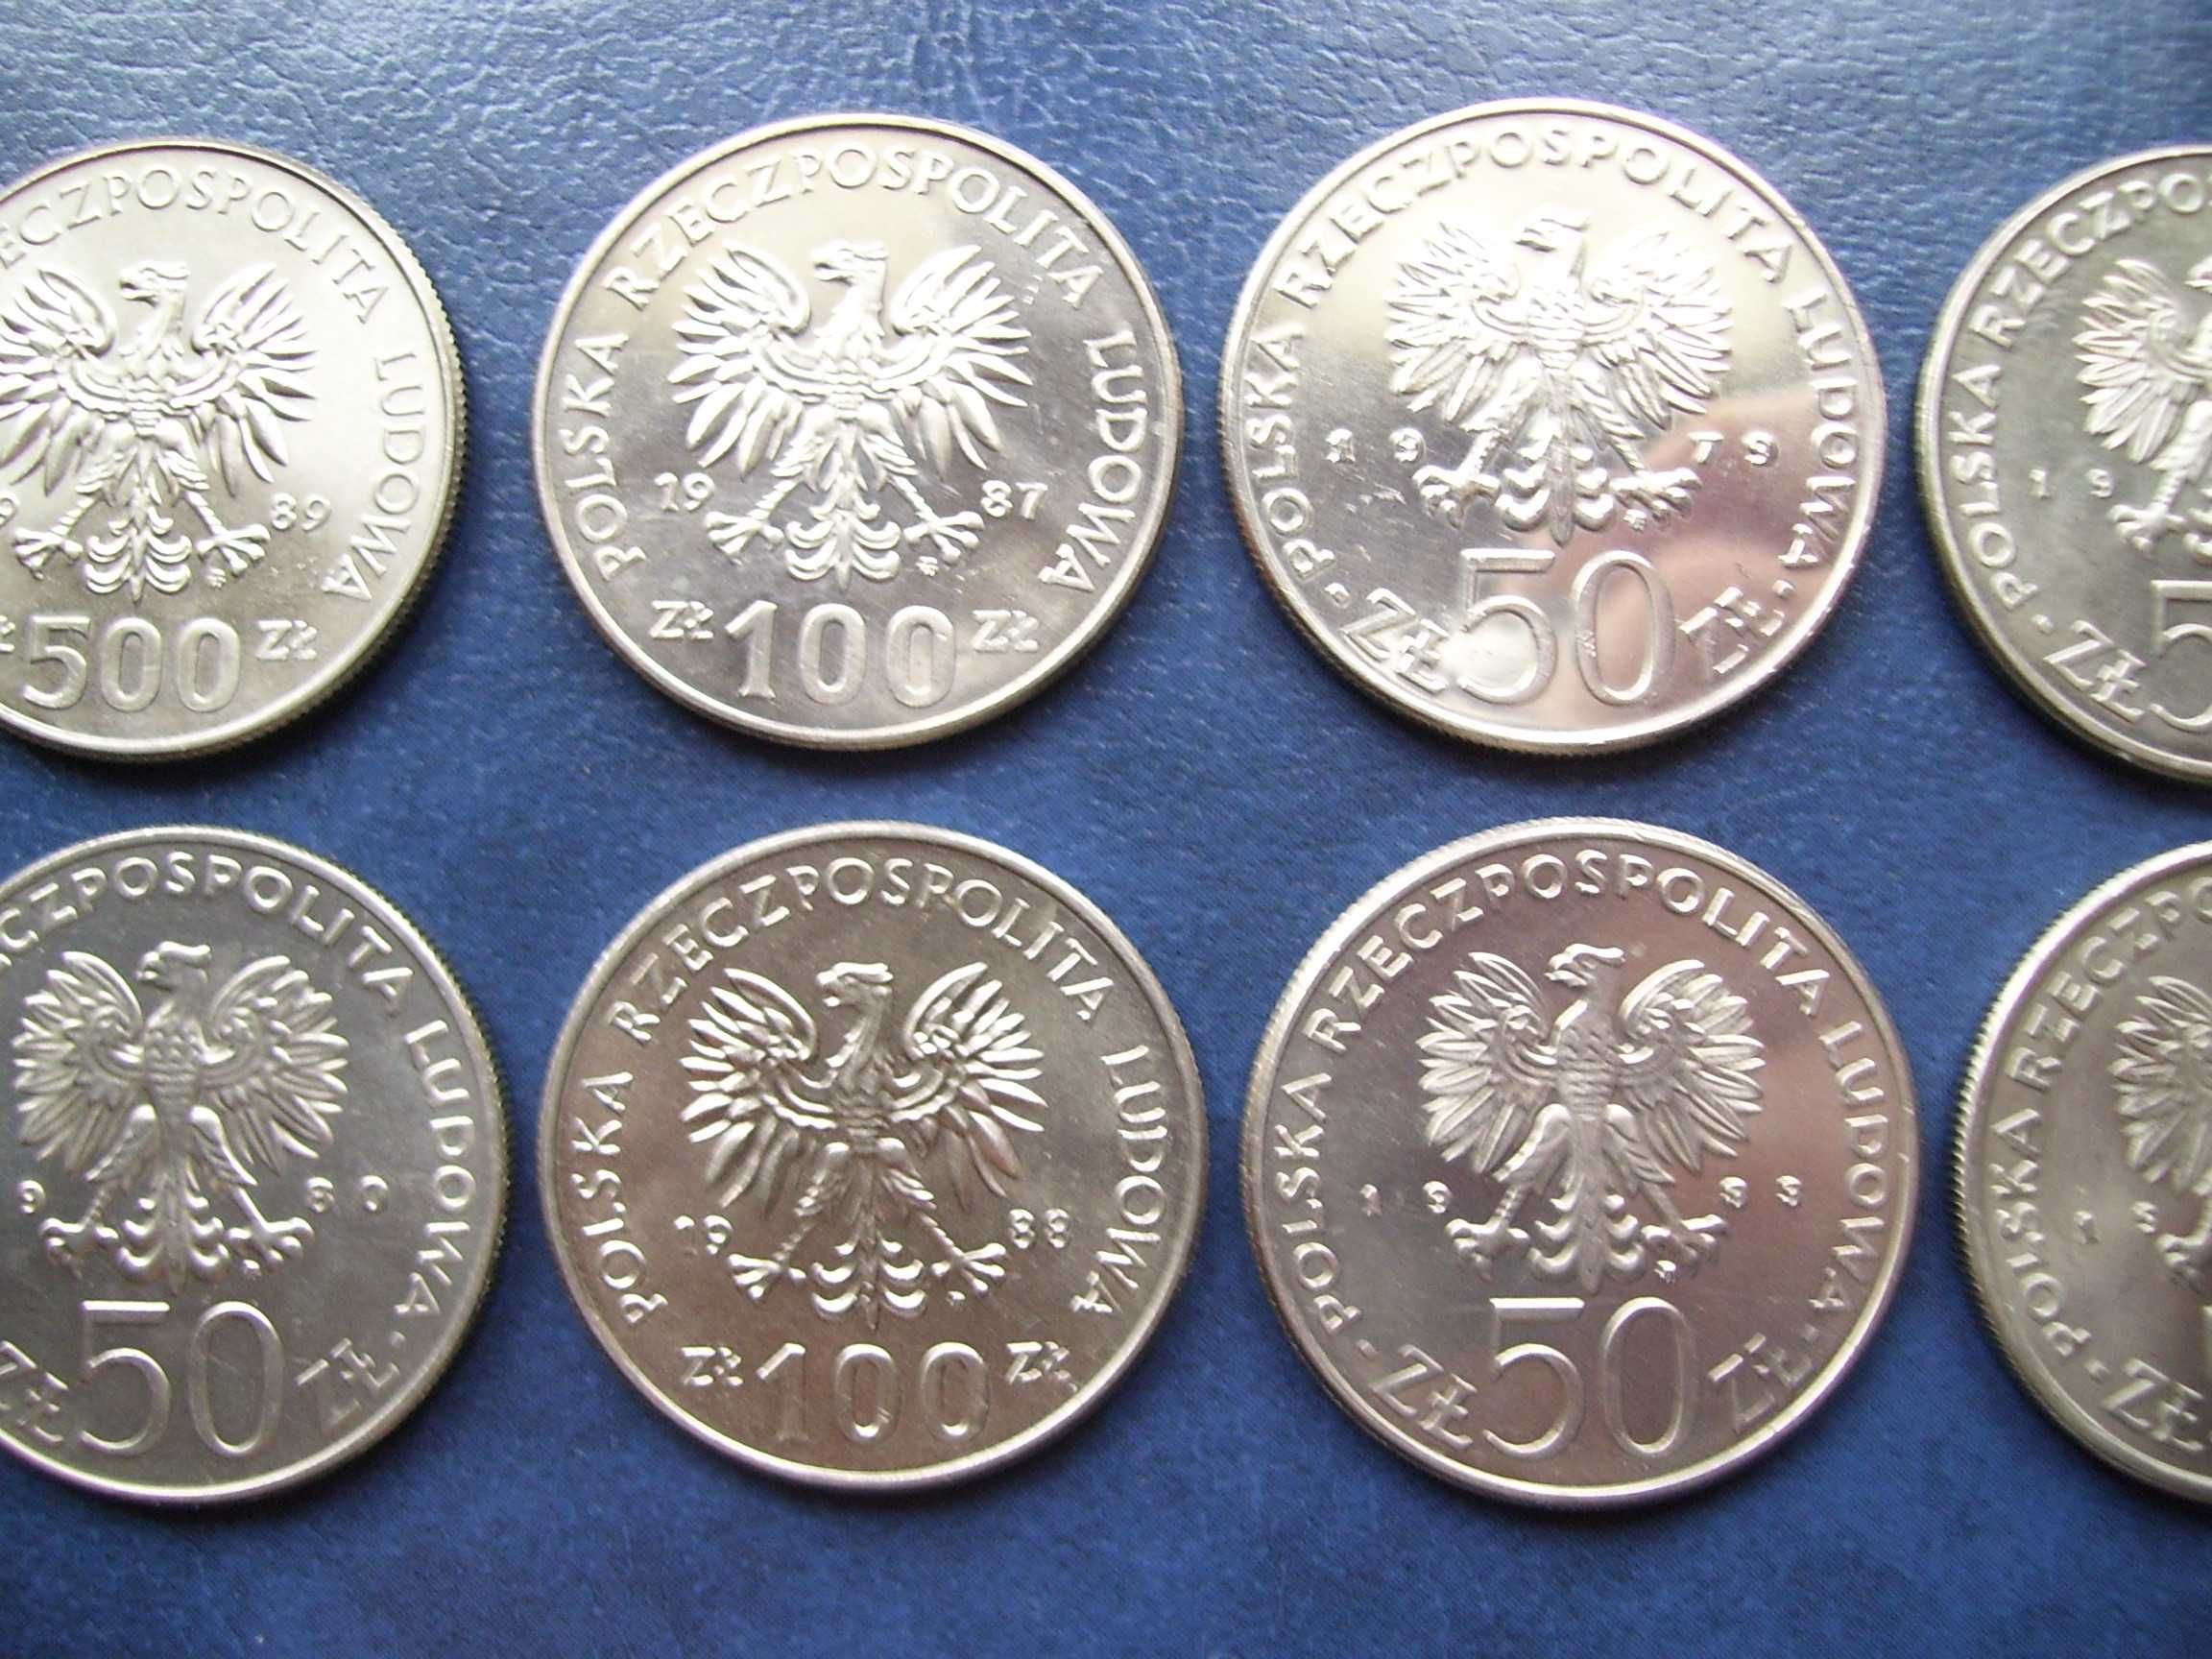 Stare monety L  12 monet Poczet Królów Piękne stany PRL